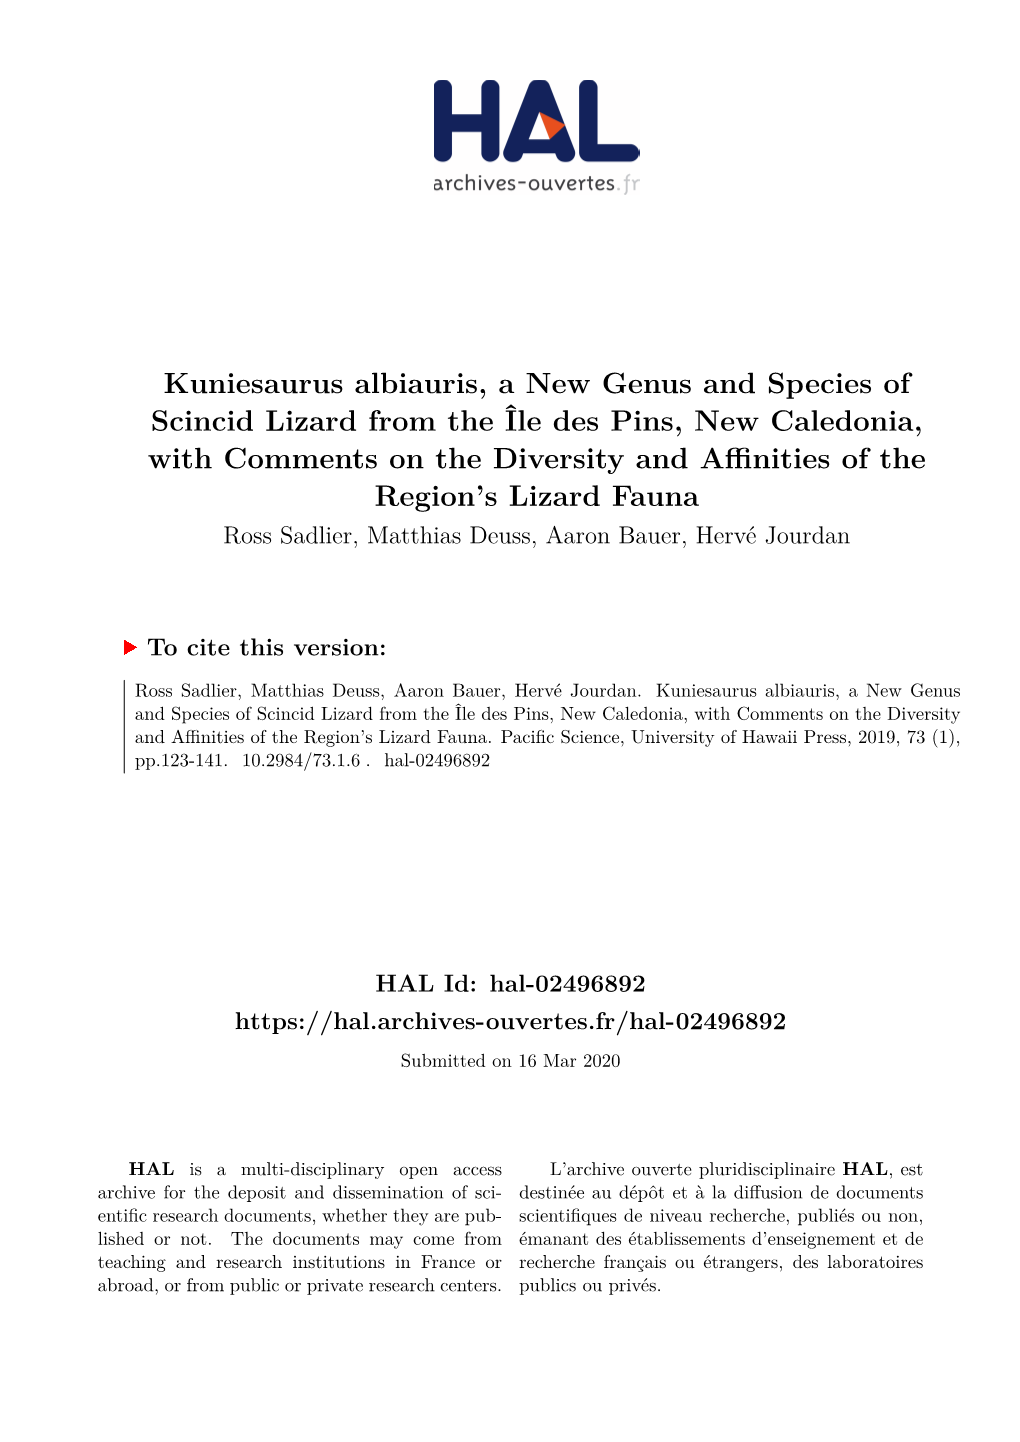 Kuniesaurus Albiauris, a New Genus and Species of Scincid Lizard From